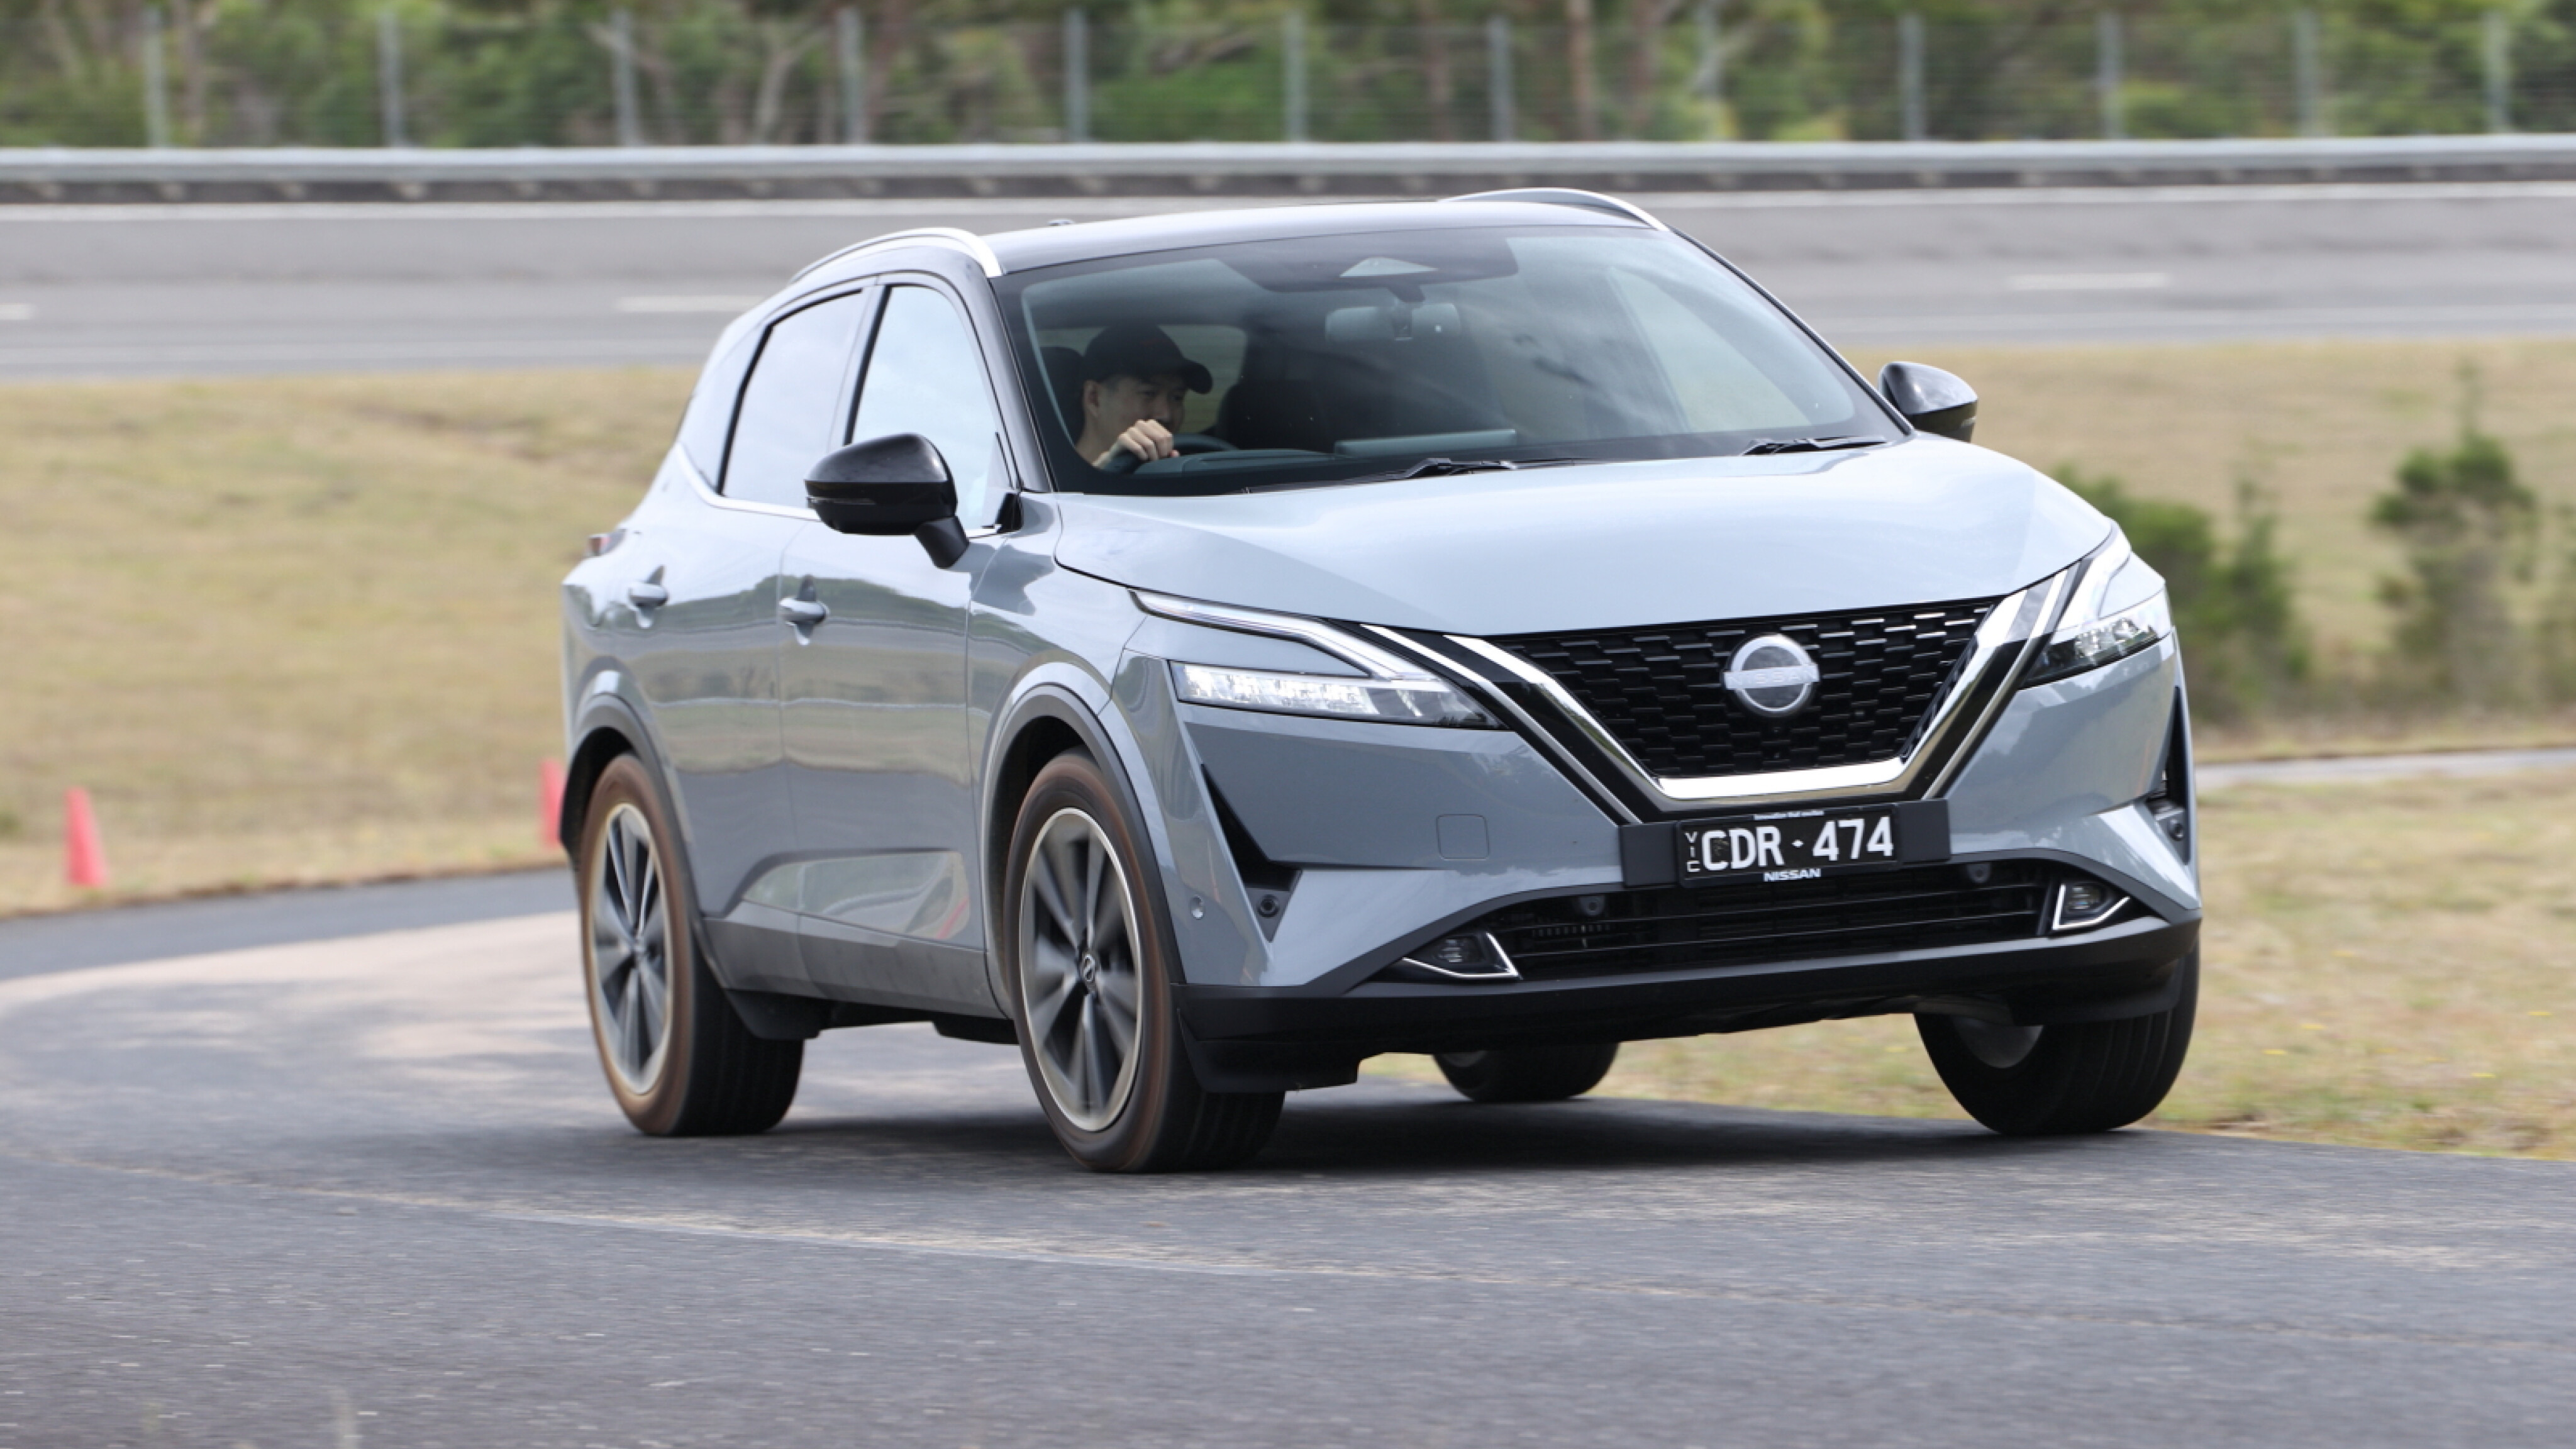 First Drive Review: Nissan Qashqai